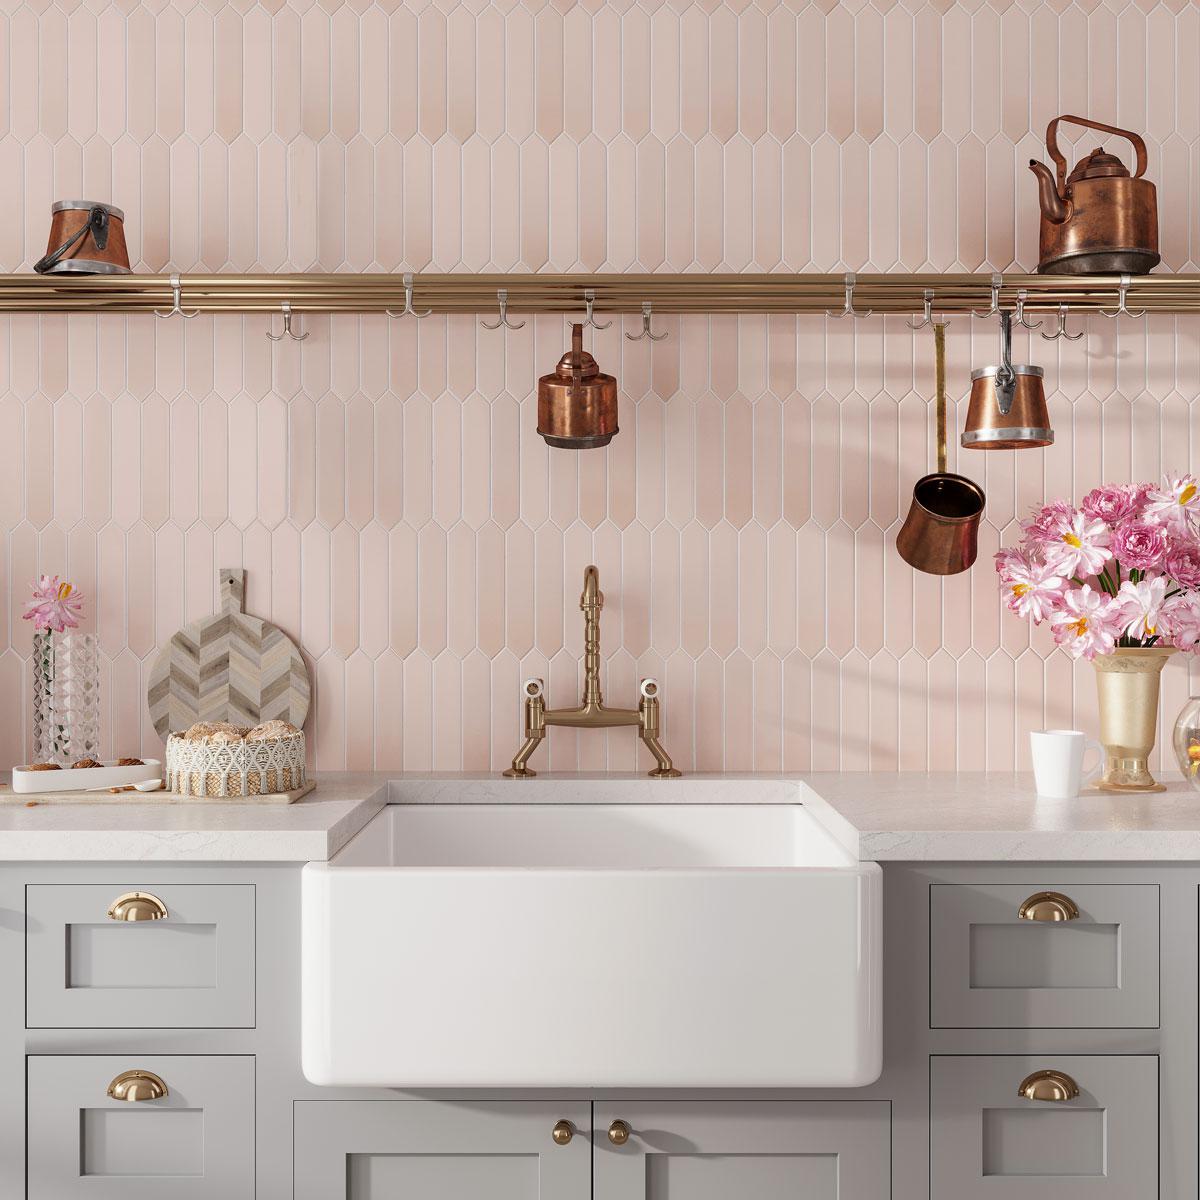 Palisades Rose Picket Ceramic Tile  Trending decor, Shower floor, Home  decor trends